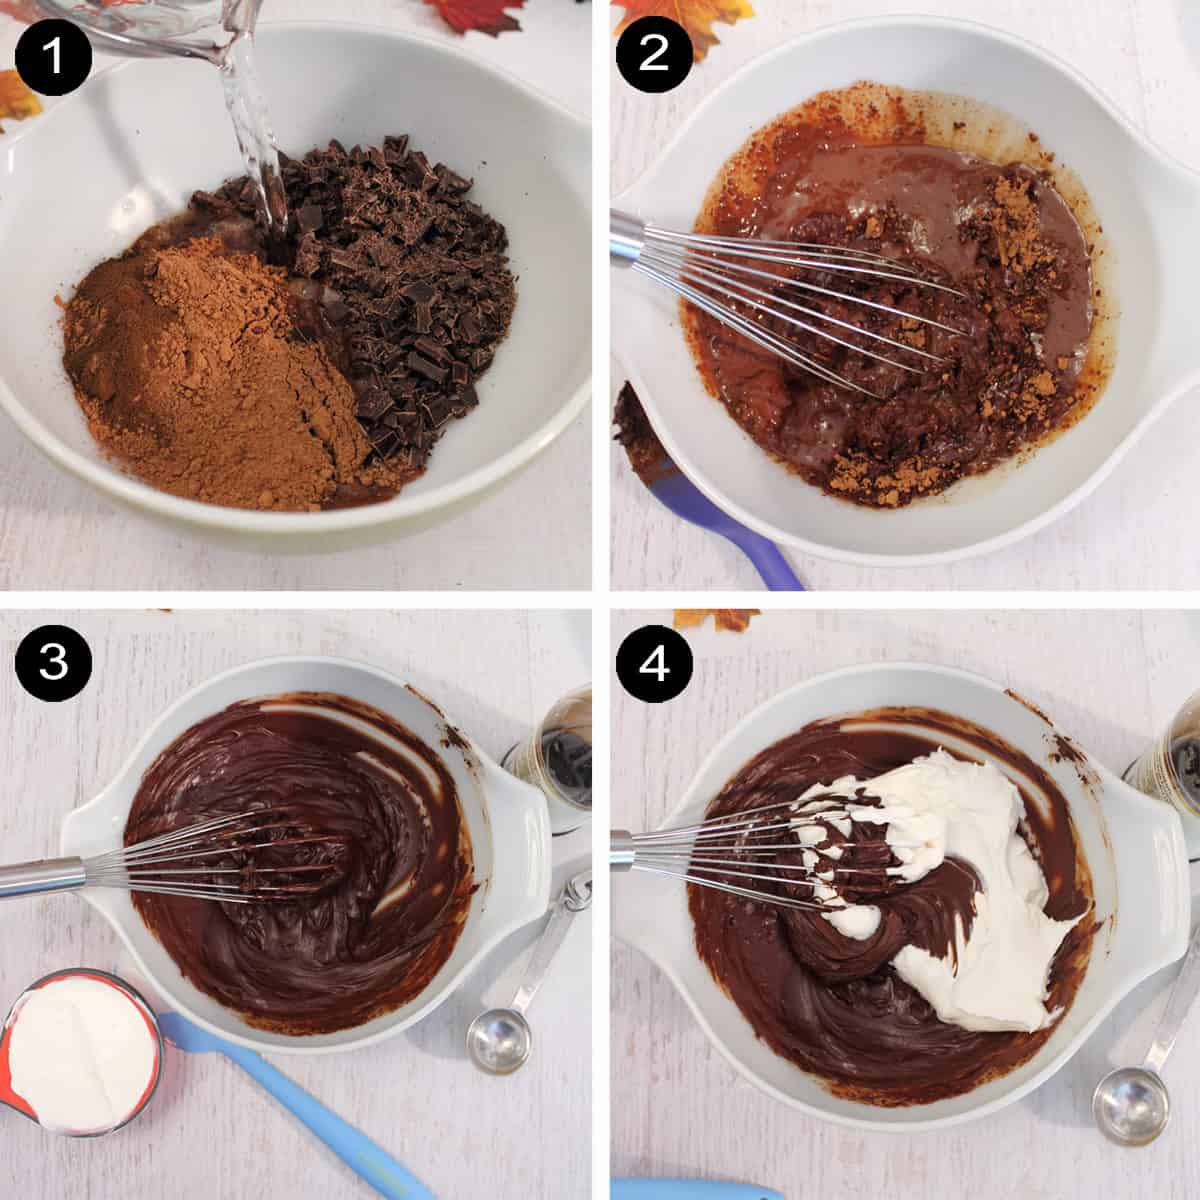 Steps 1-4 to make chocolate bundt cake.